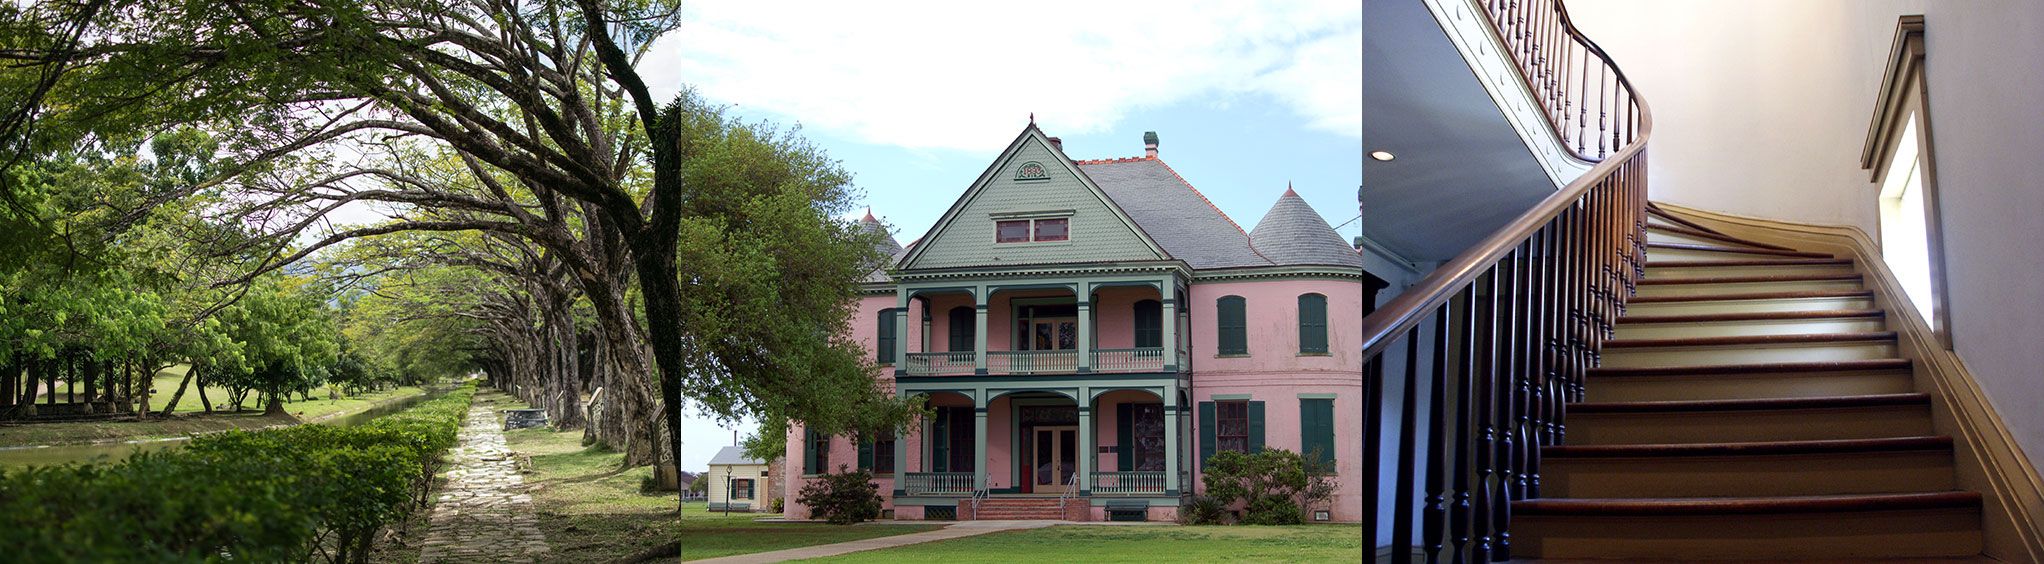 Southdown Plantation House near New Orleans